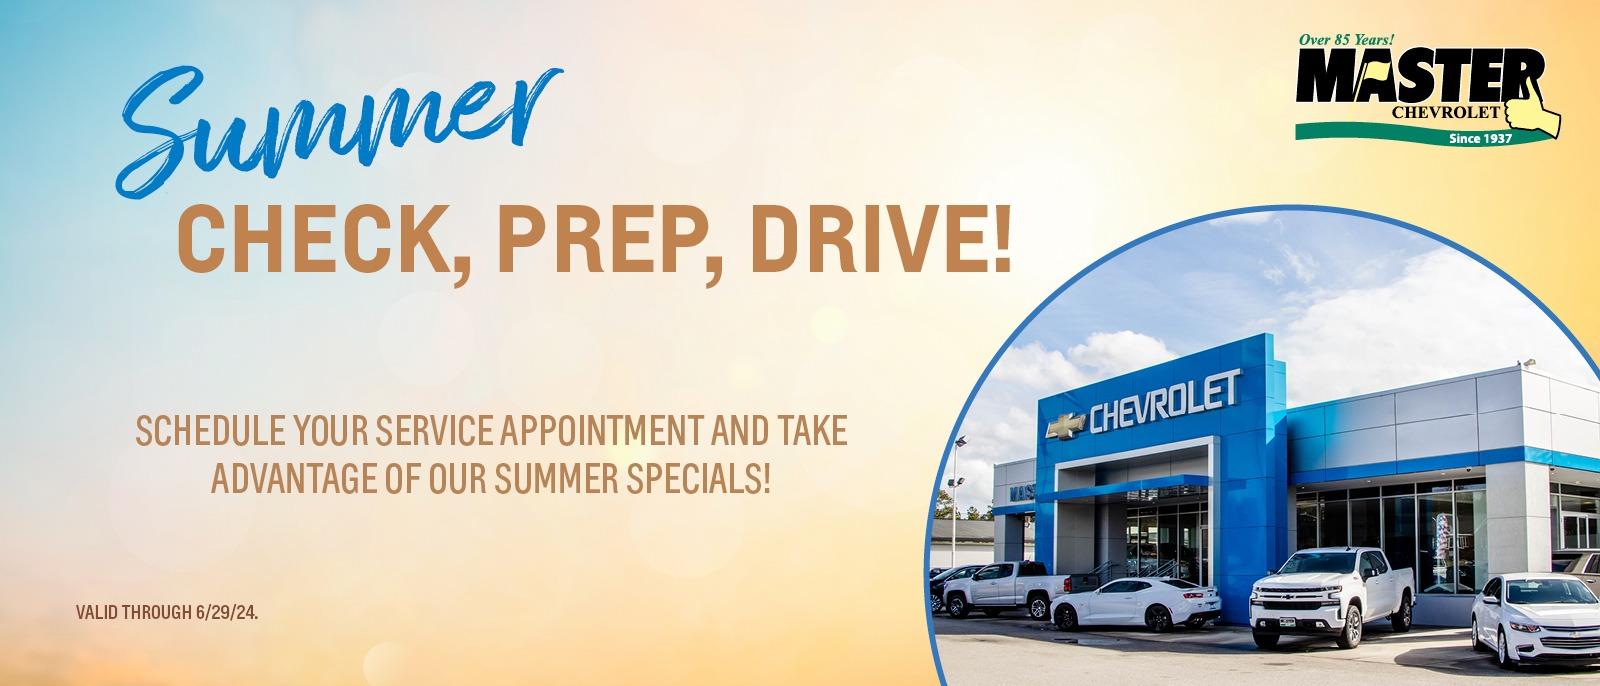 Summer Check, Prep, Drive!